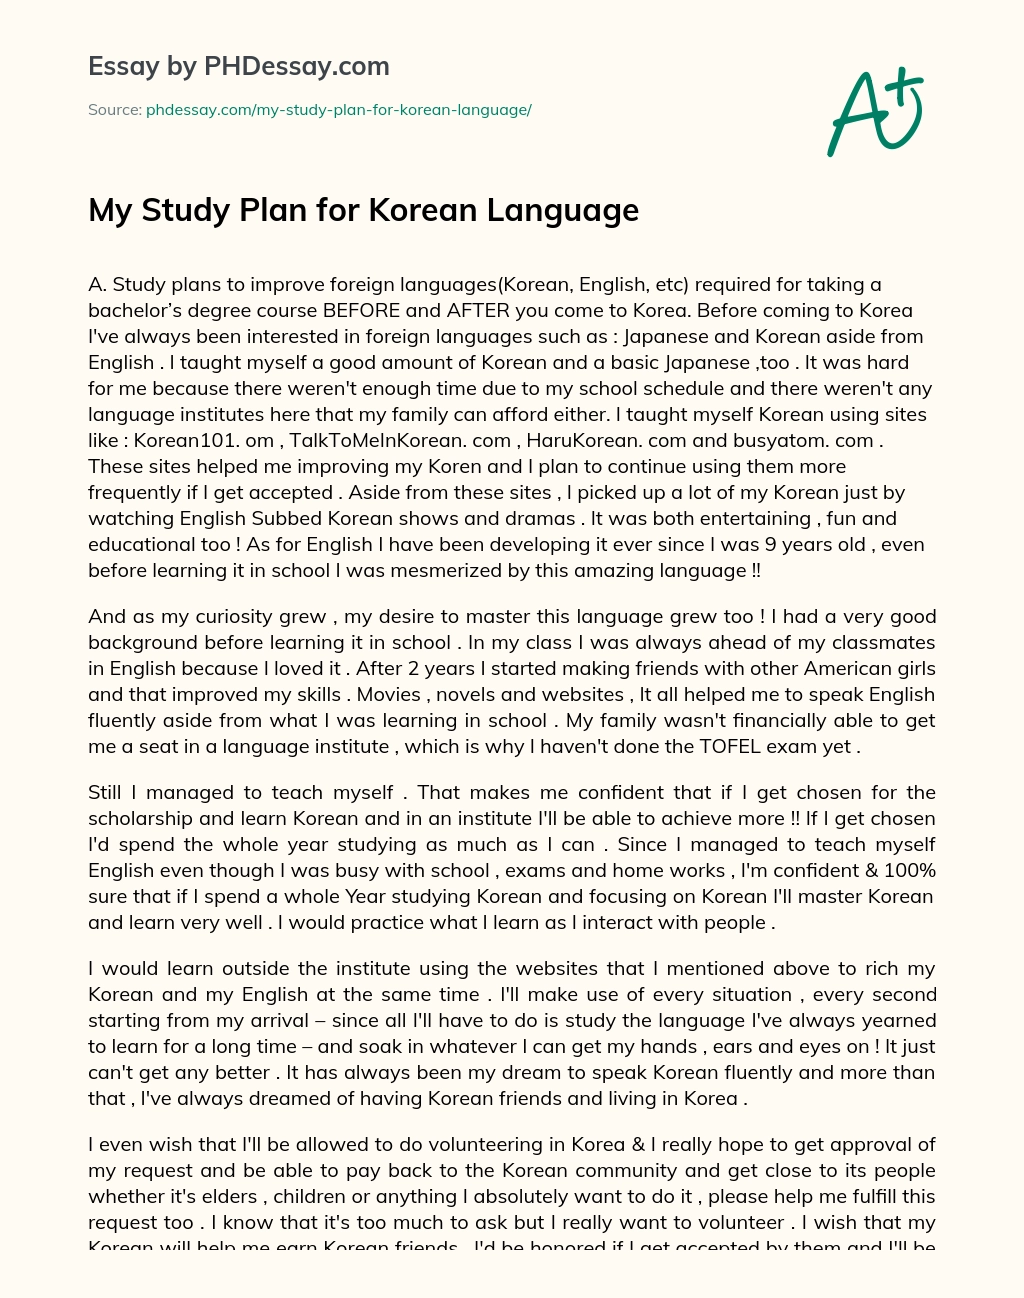 My Study Plan for Korean Language essay